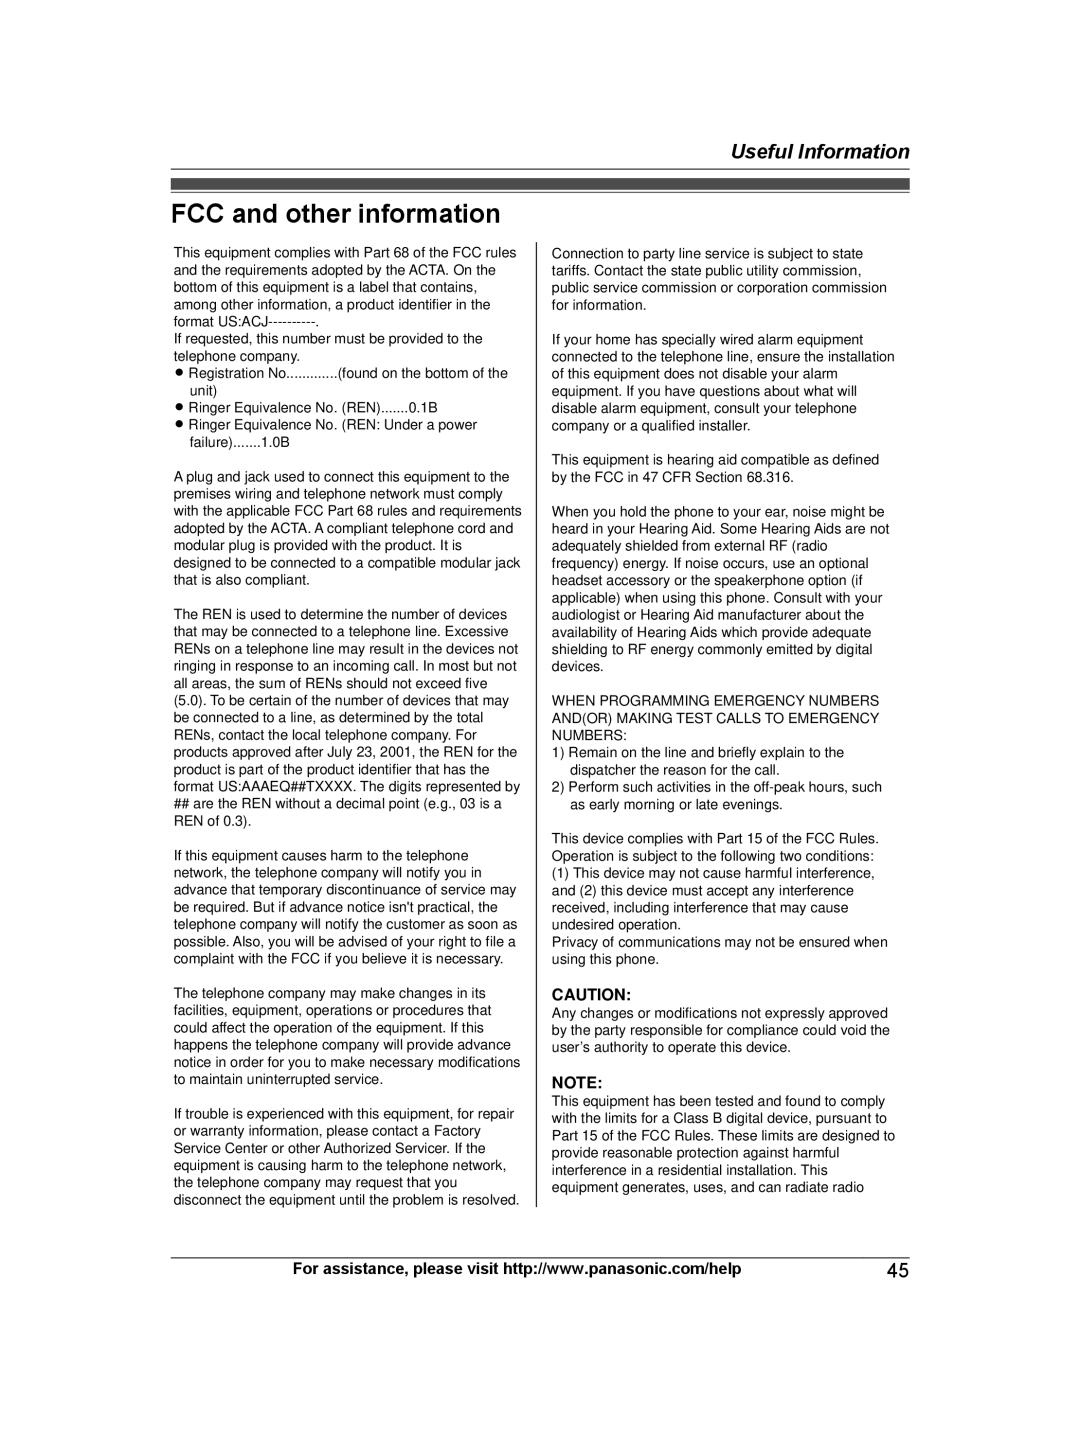 Panasonic KX-TG6672B, KX-TG6671, KXTG6672B, KXTG6671B operating instructions FCC and other information, Useful Information 